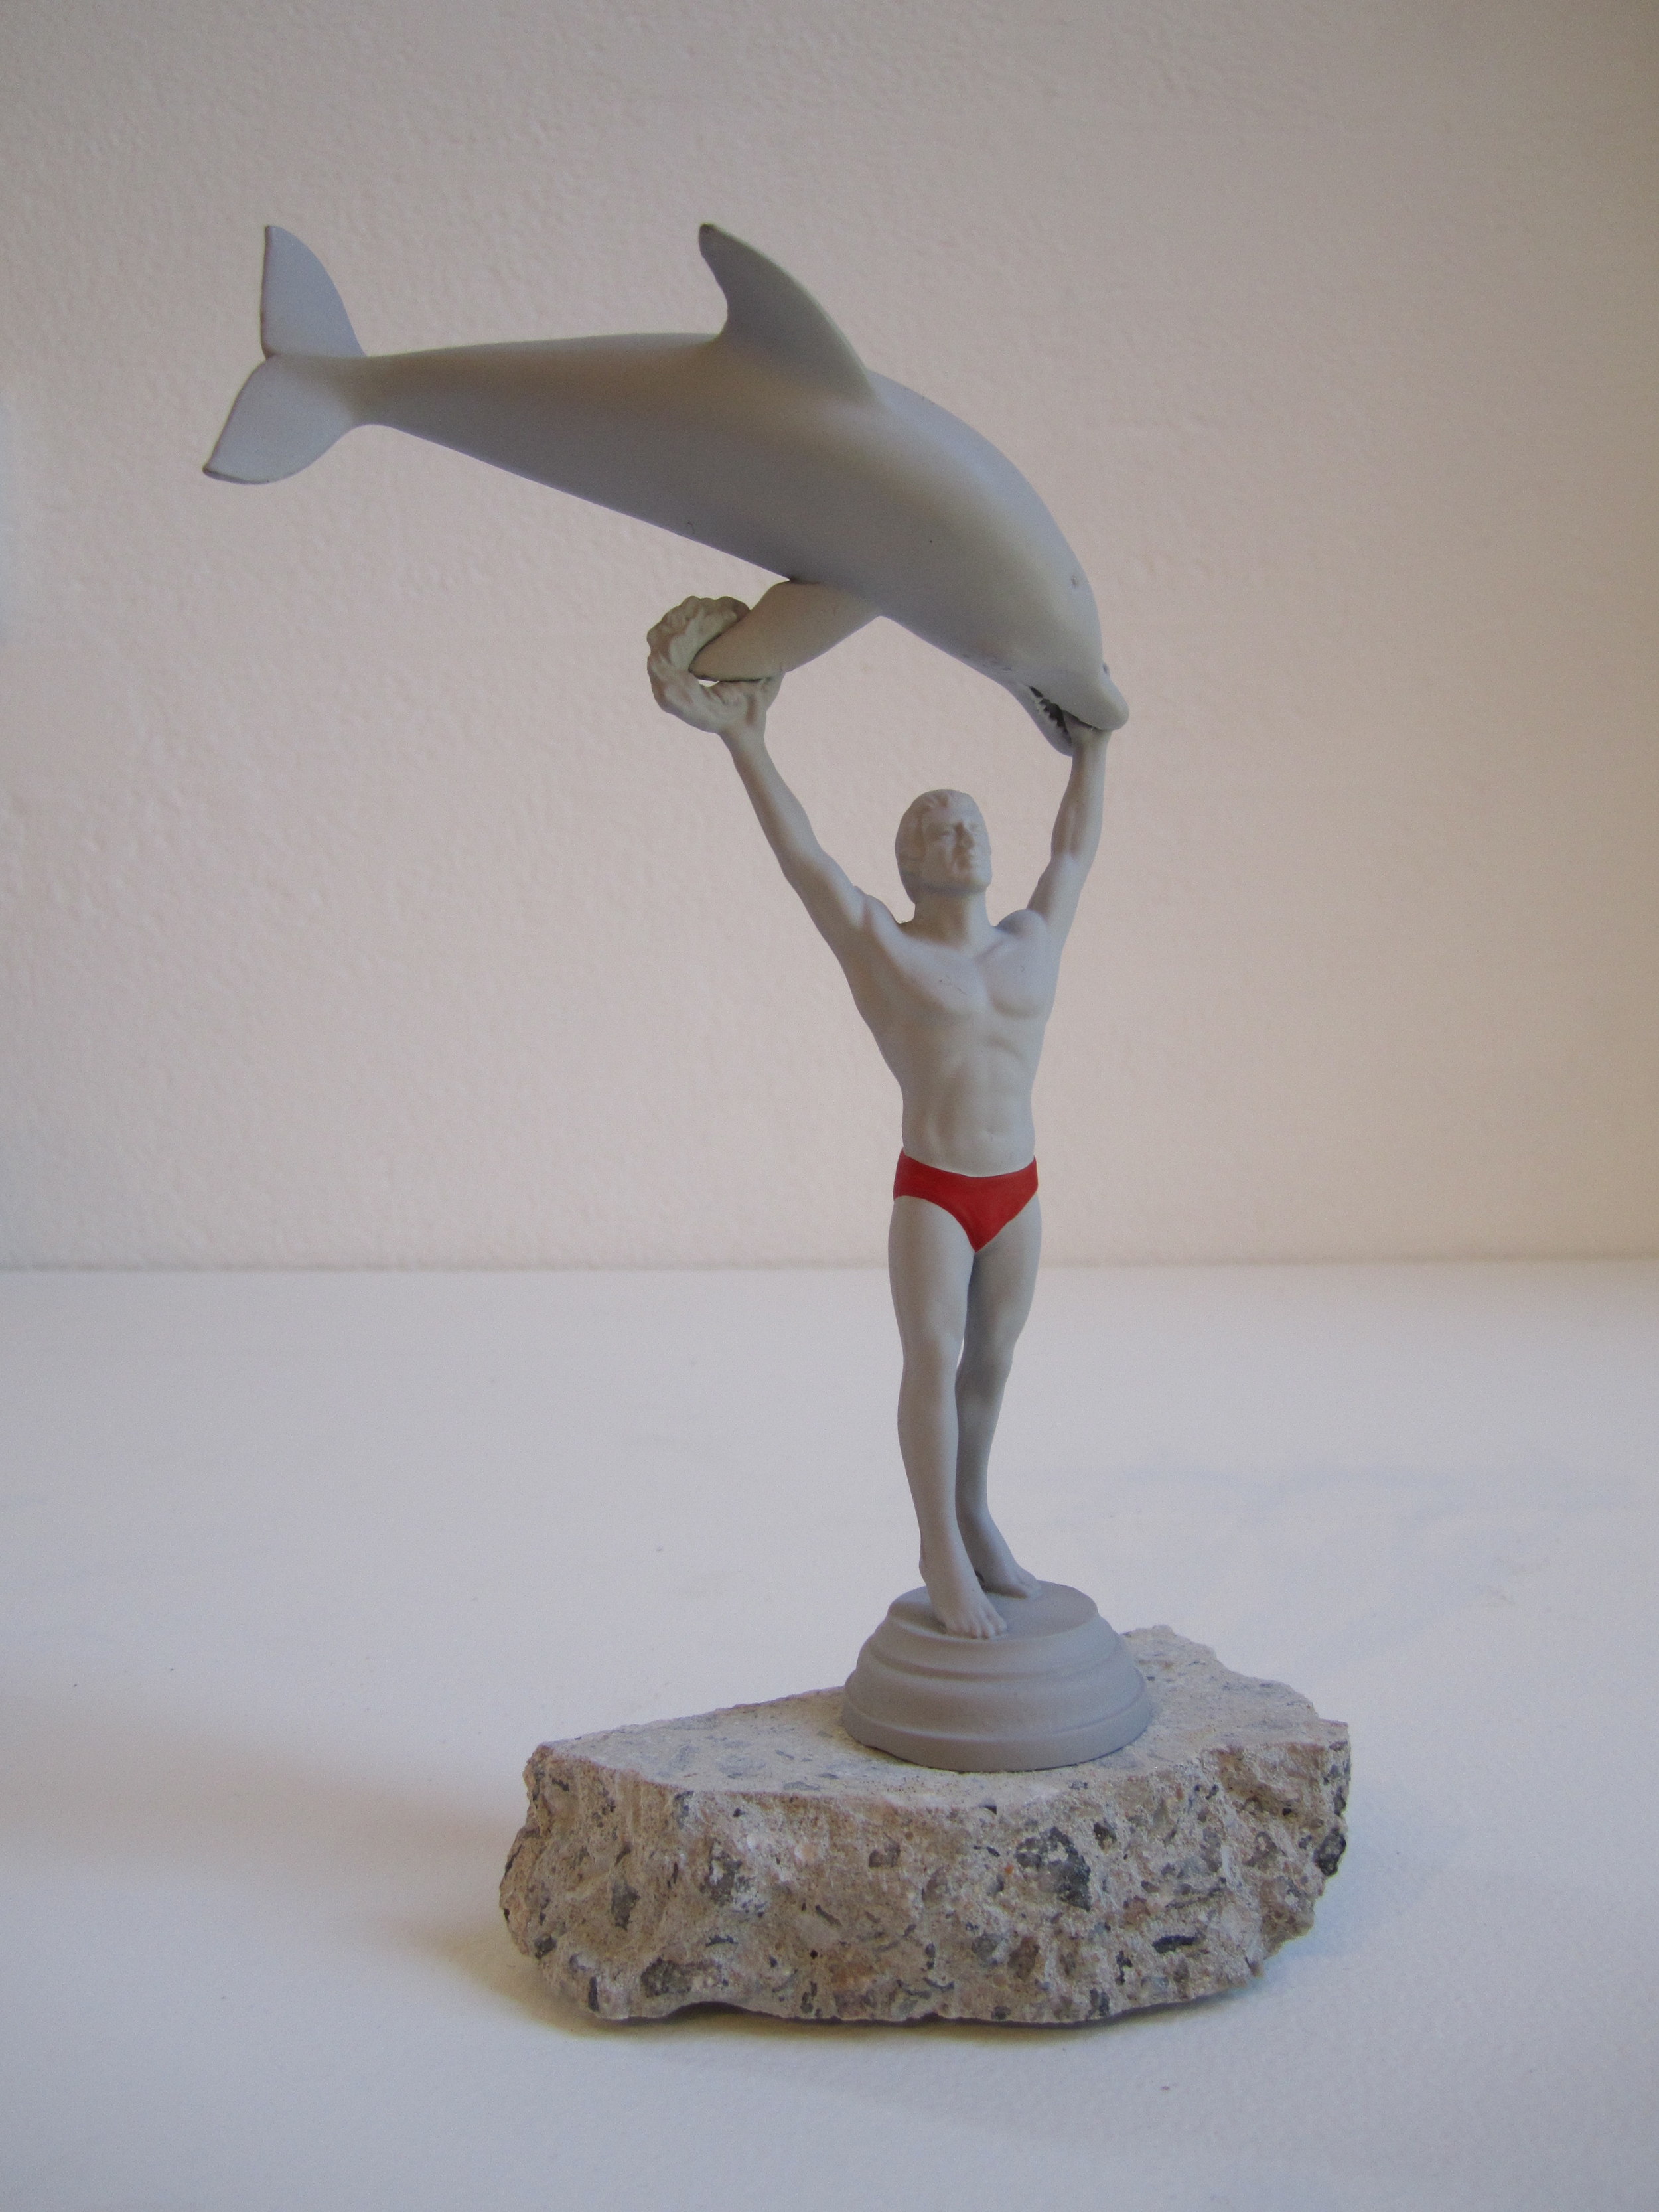   Dolphin Trick, 2011    Enamel on acrylic, concrete 20 x 15 x 6 cm   